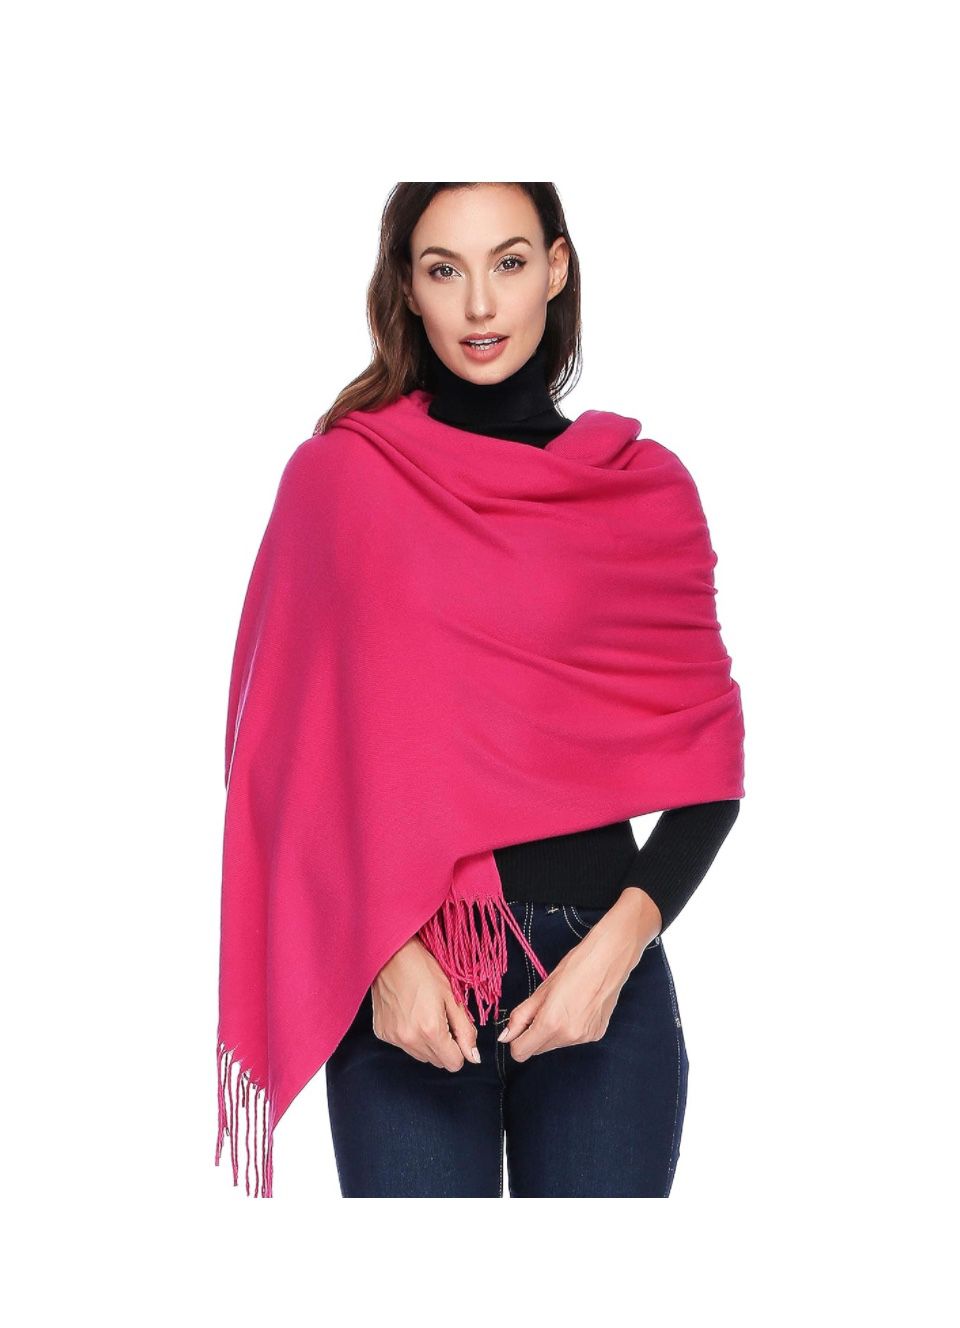 New Wool Shawl Wraps - Extra Large Thick Soft Pashmina Scarf